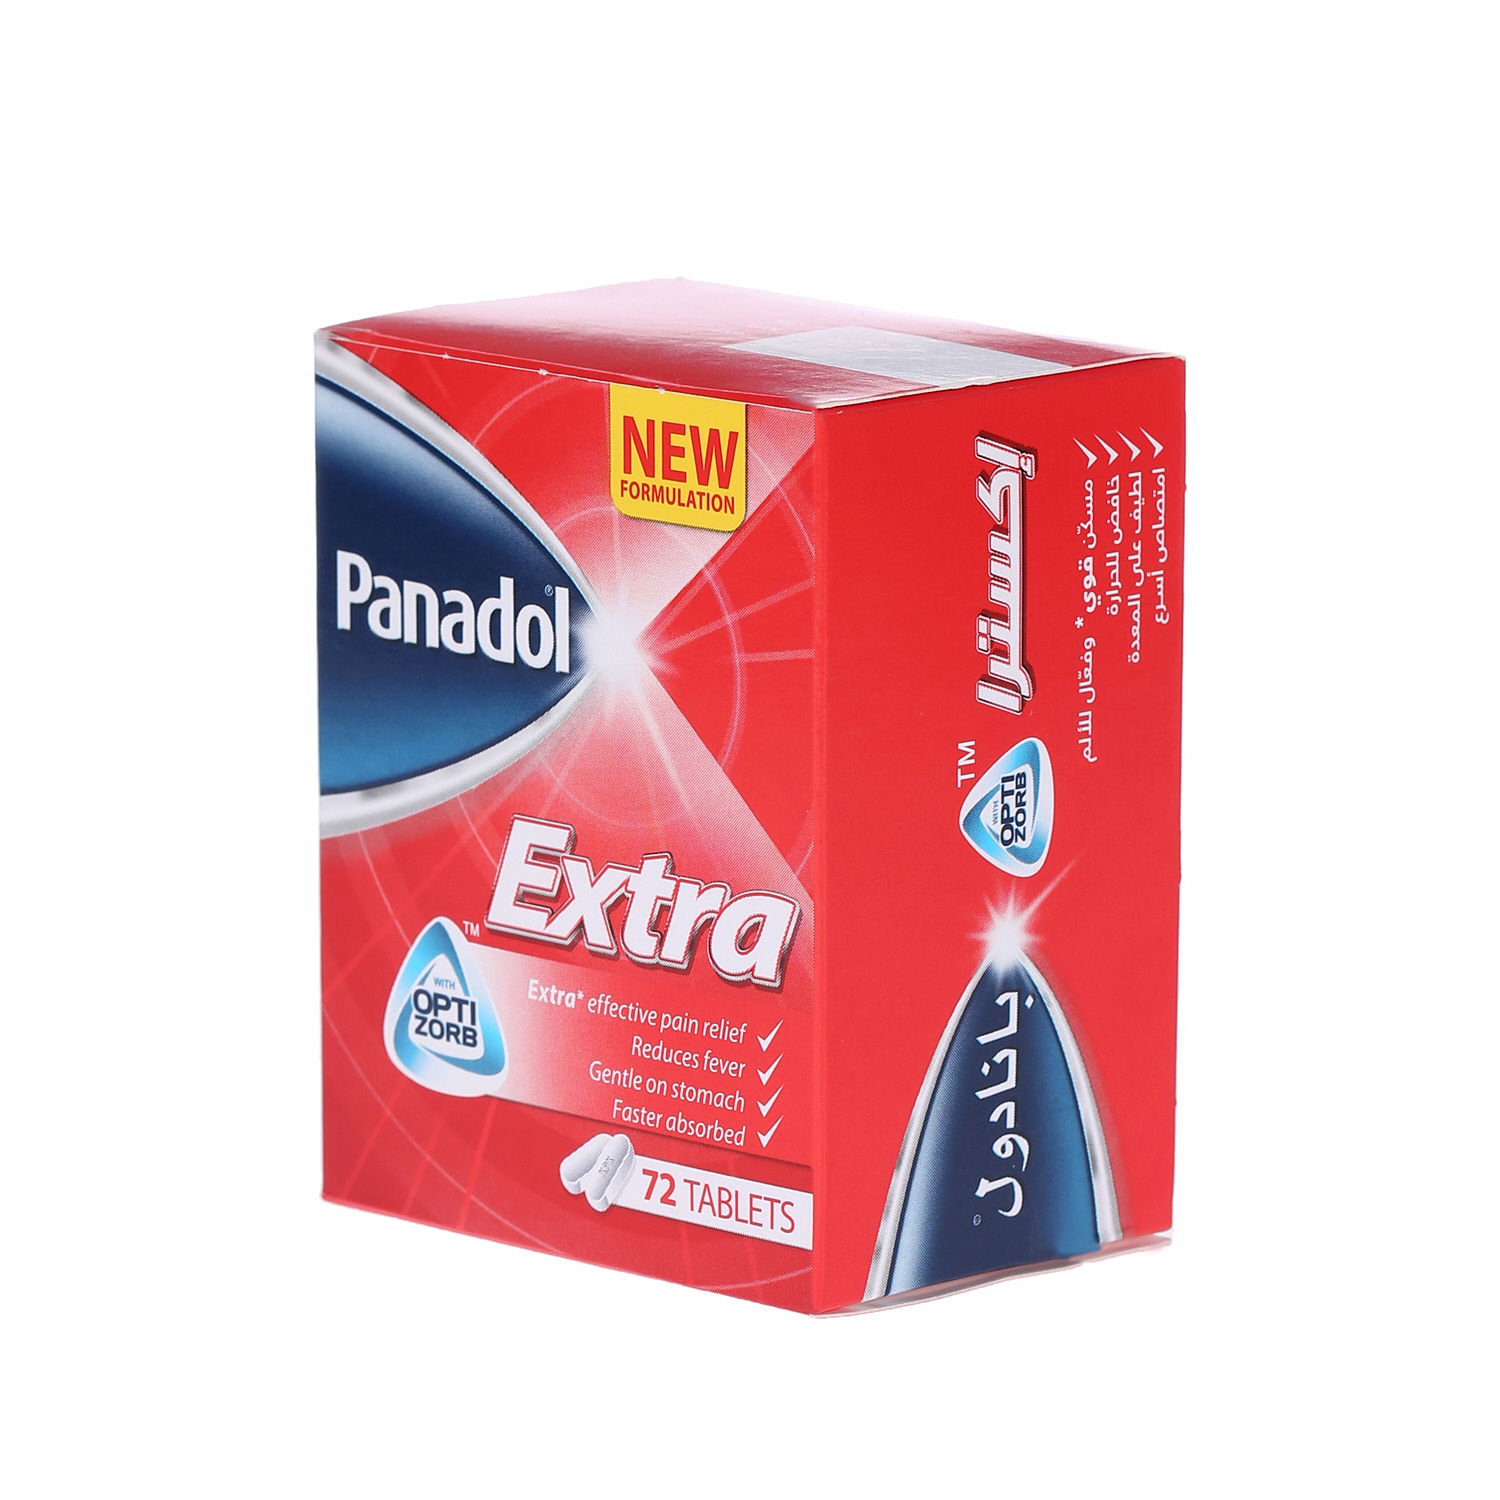 Panadol Extra with Optizorb 72 Tablets